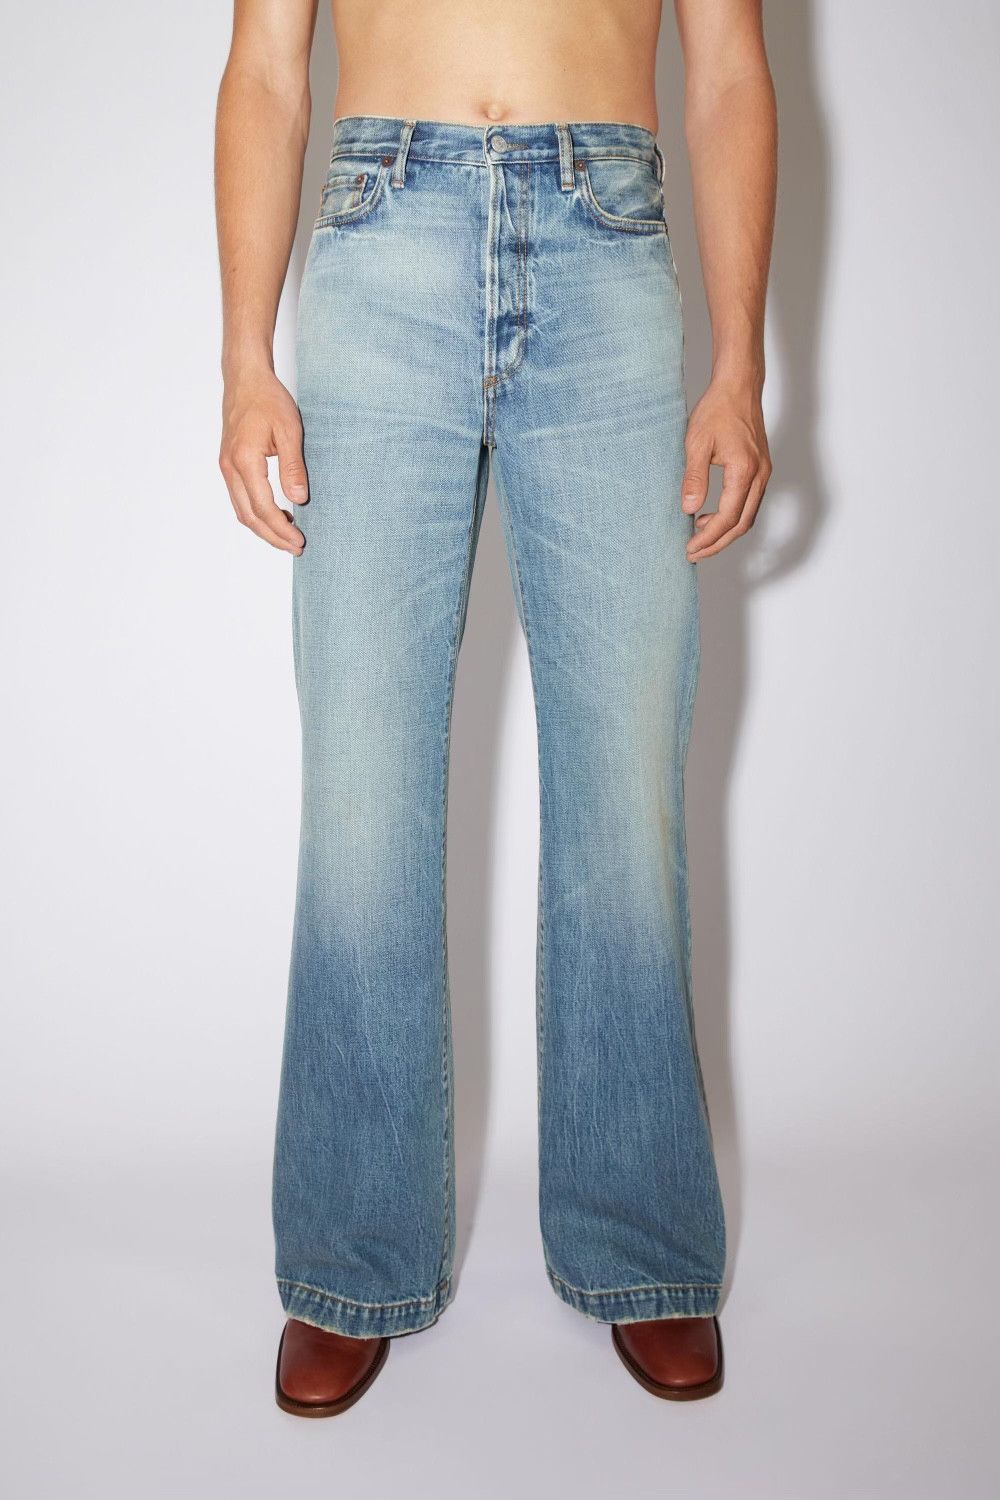 Acne Studios Acne studios Flare jeans 1978, bootcut denim trousers